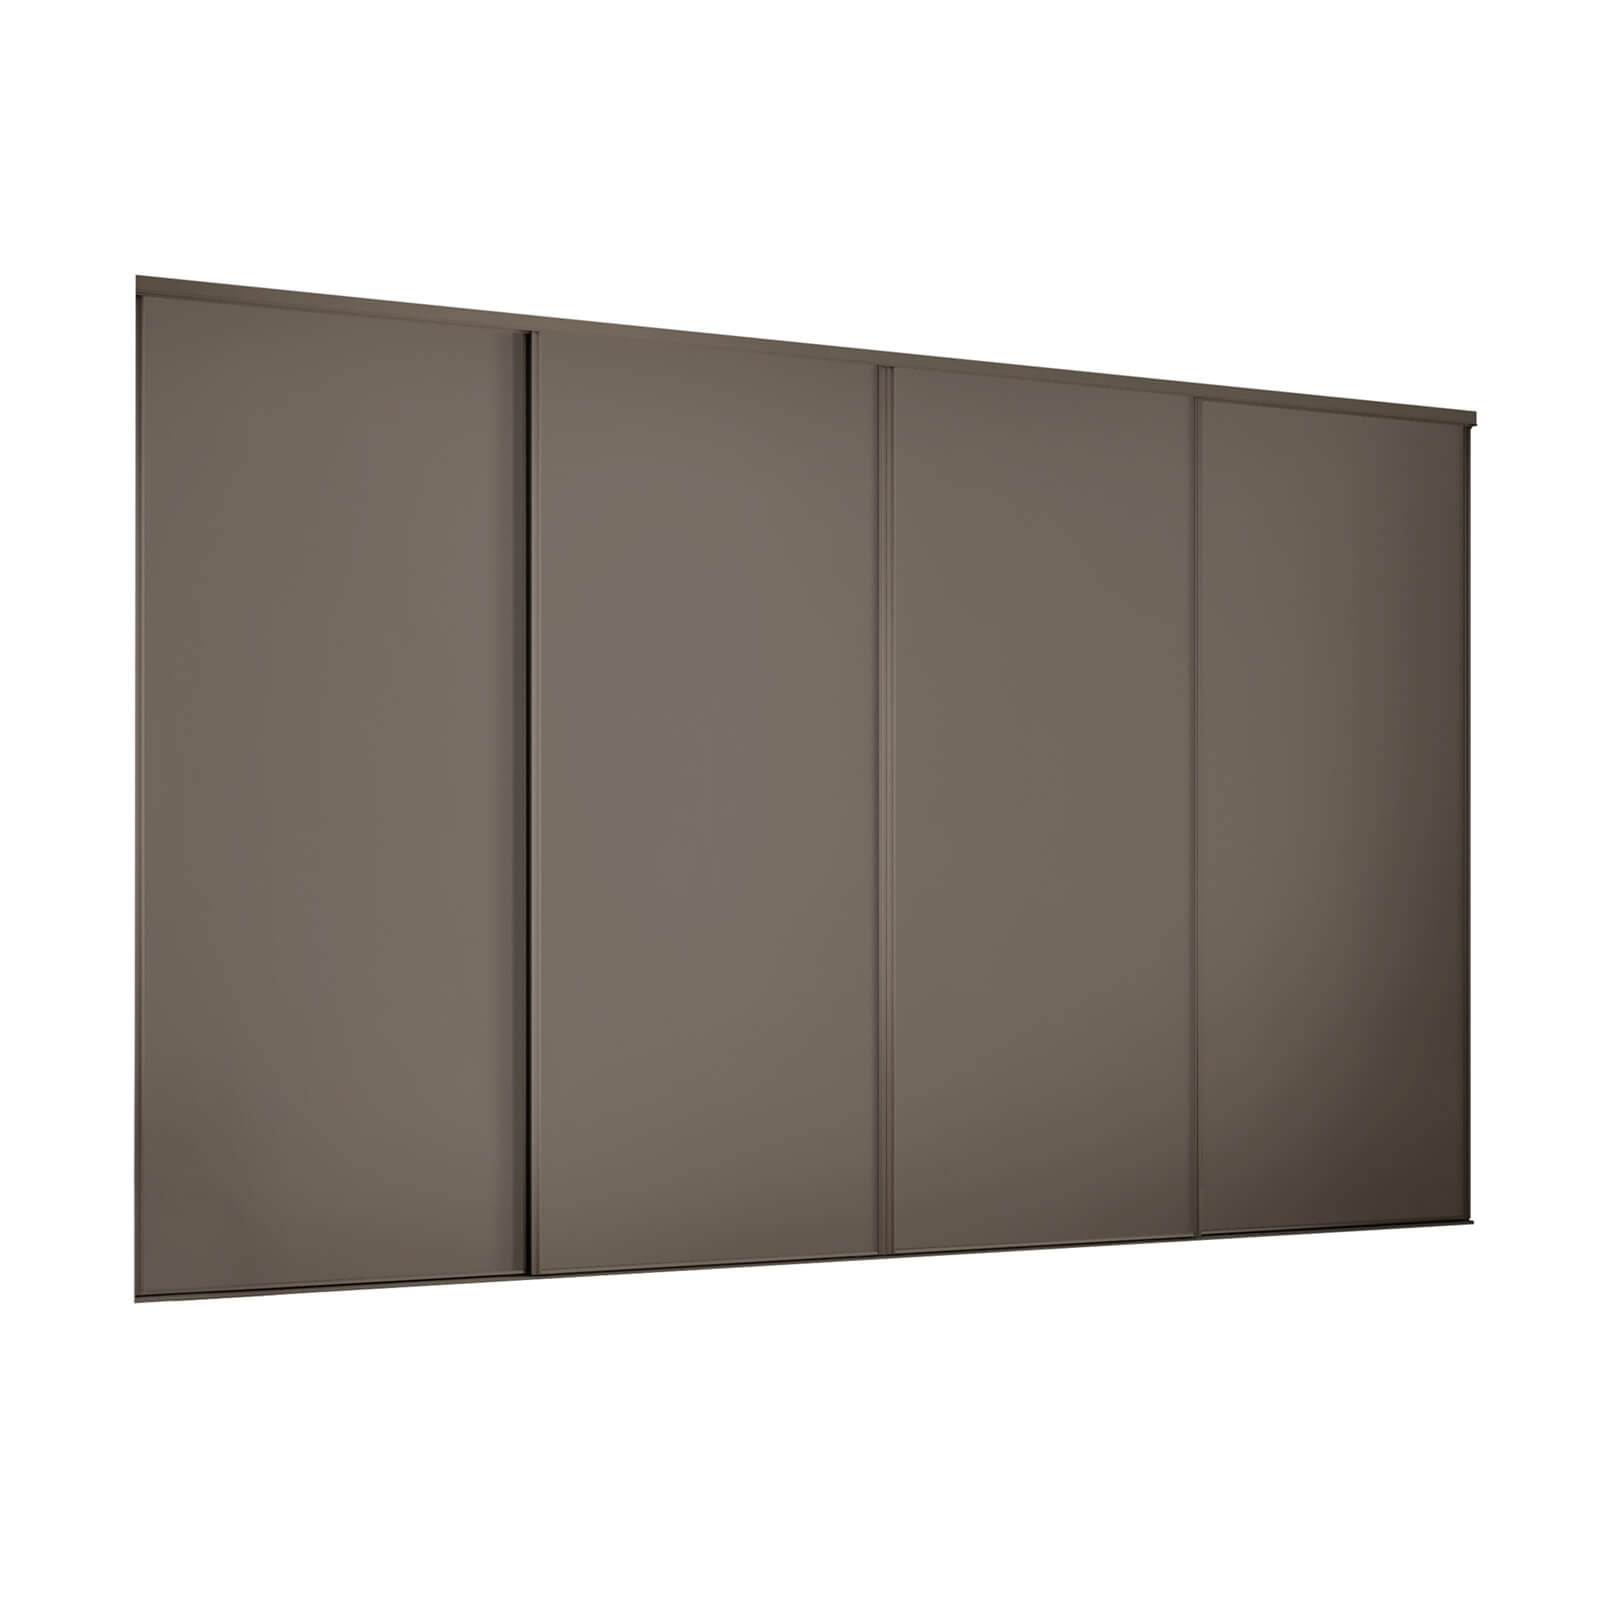 Photo of Classic 4 Door Sliding Wardrobe Kit Stone Grey Panel -w-2978 X -h-2260mm